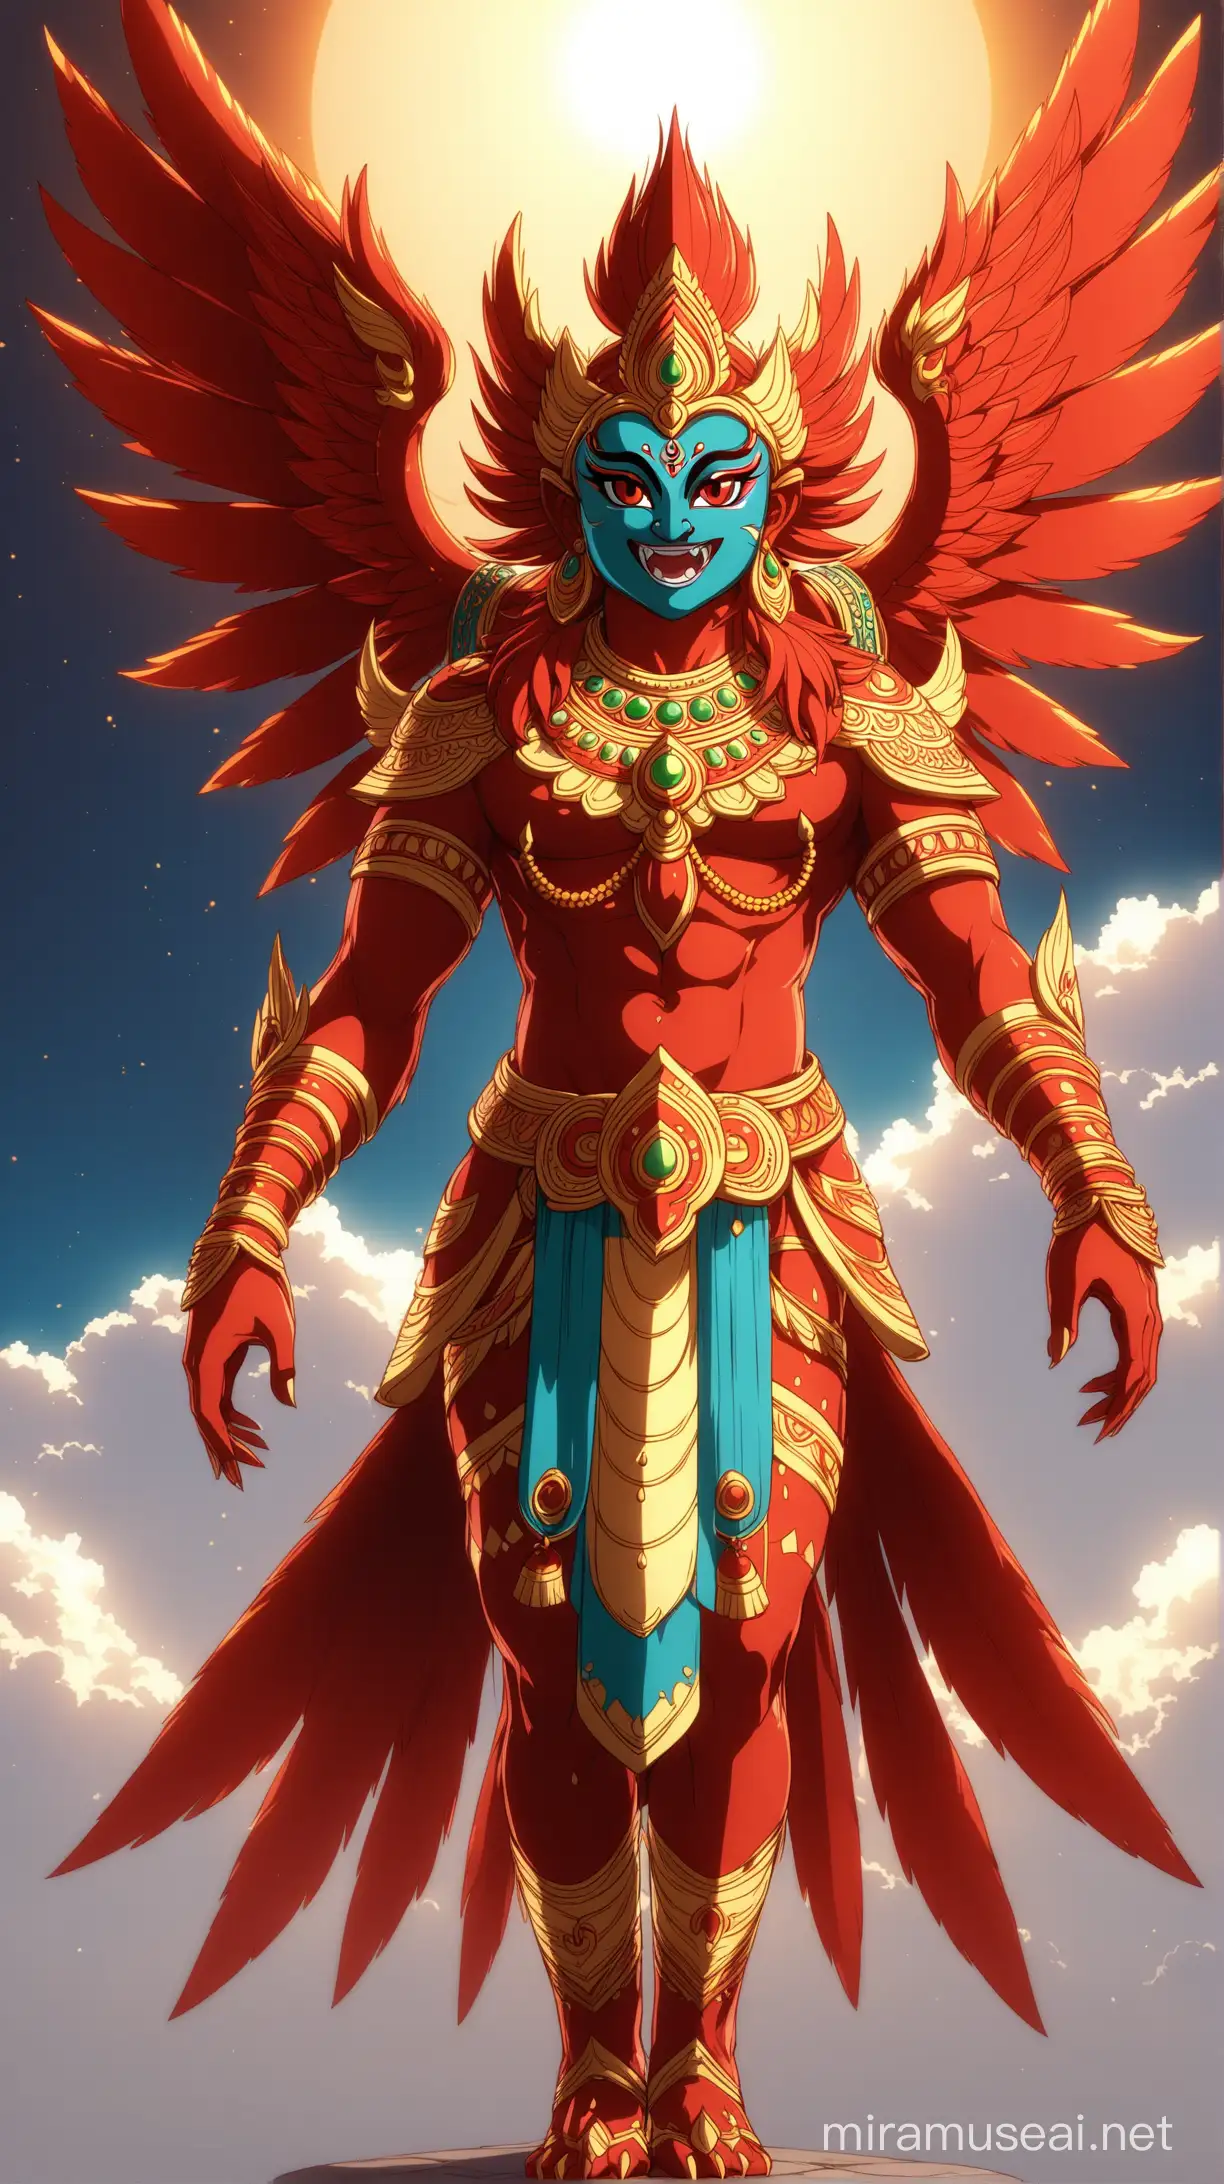 Divine 3D Anime Rendering of Indian Deity Garuda